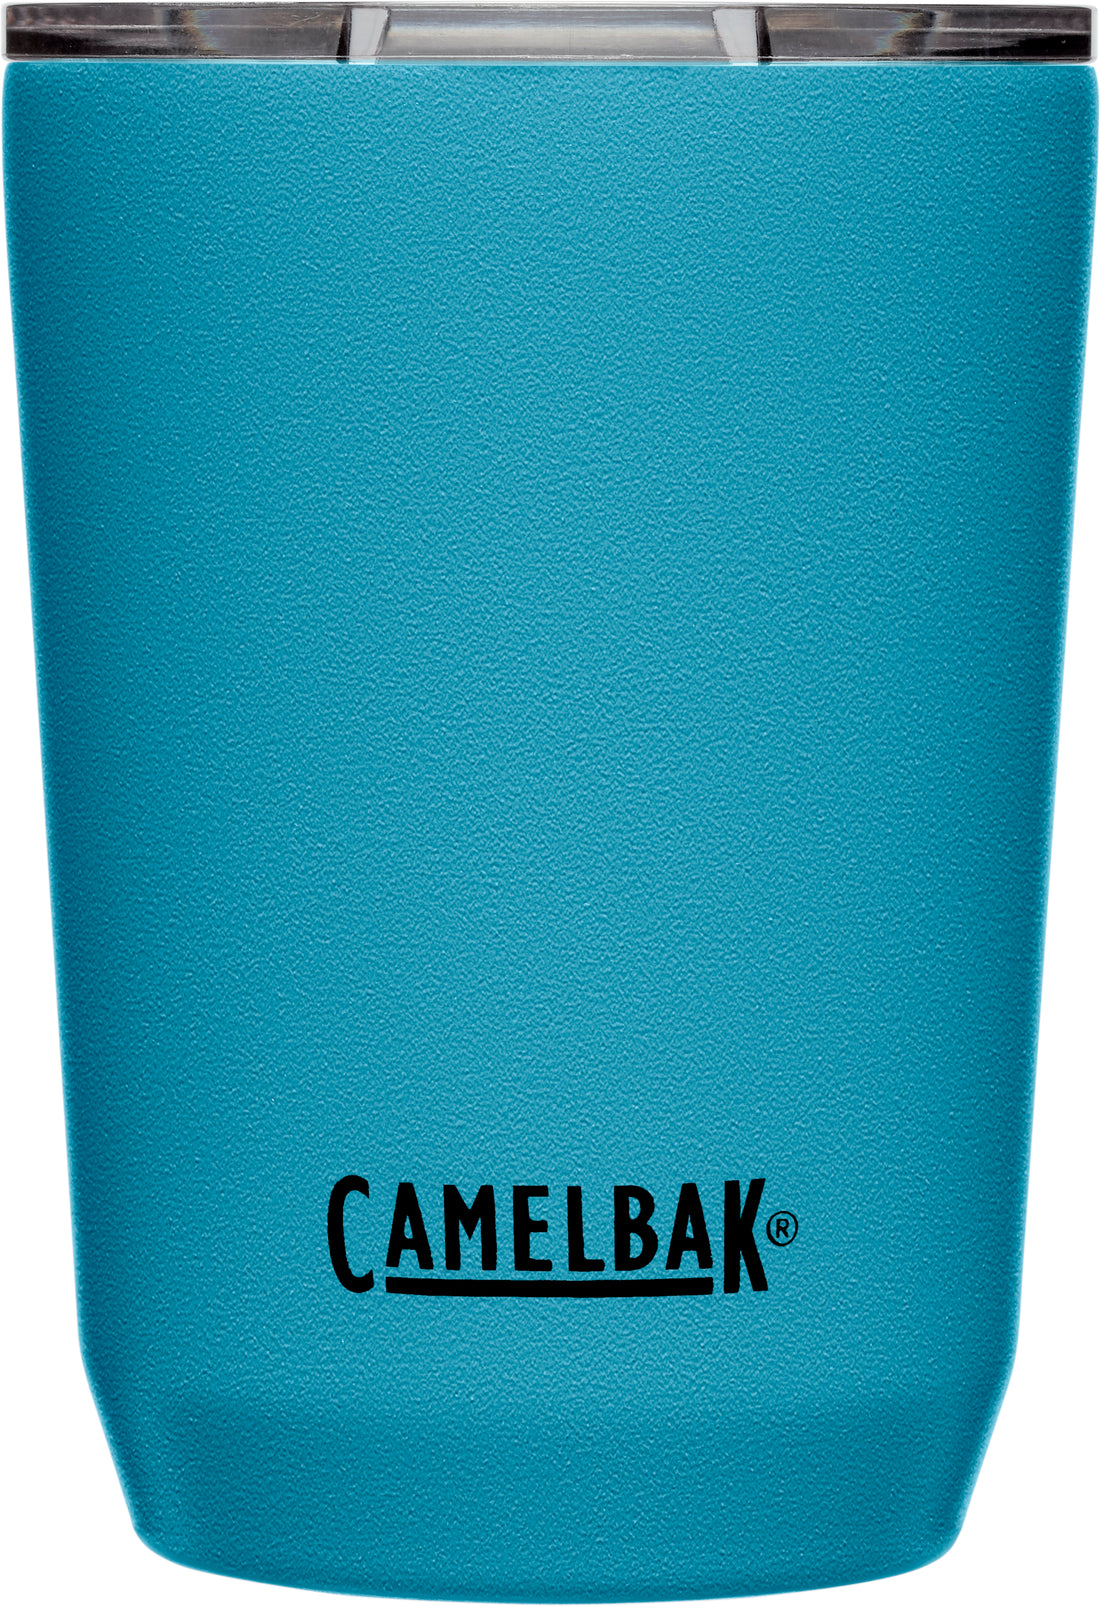 CamelBak Horizon Insulated Tumbler Review